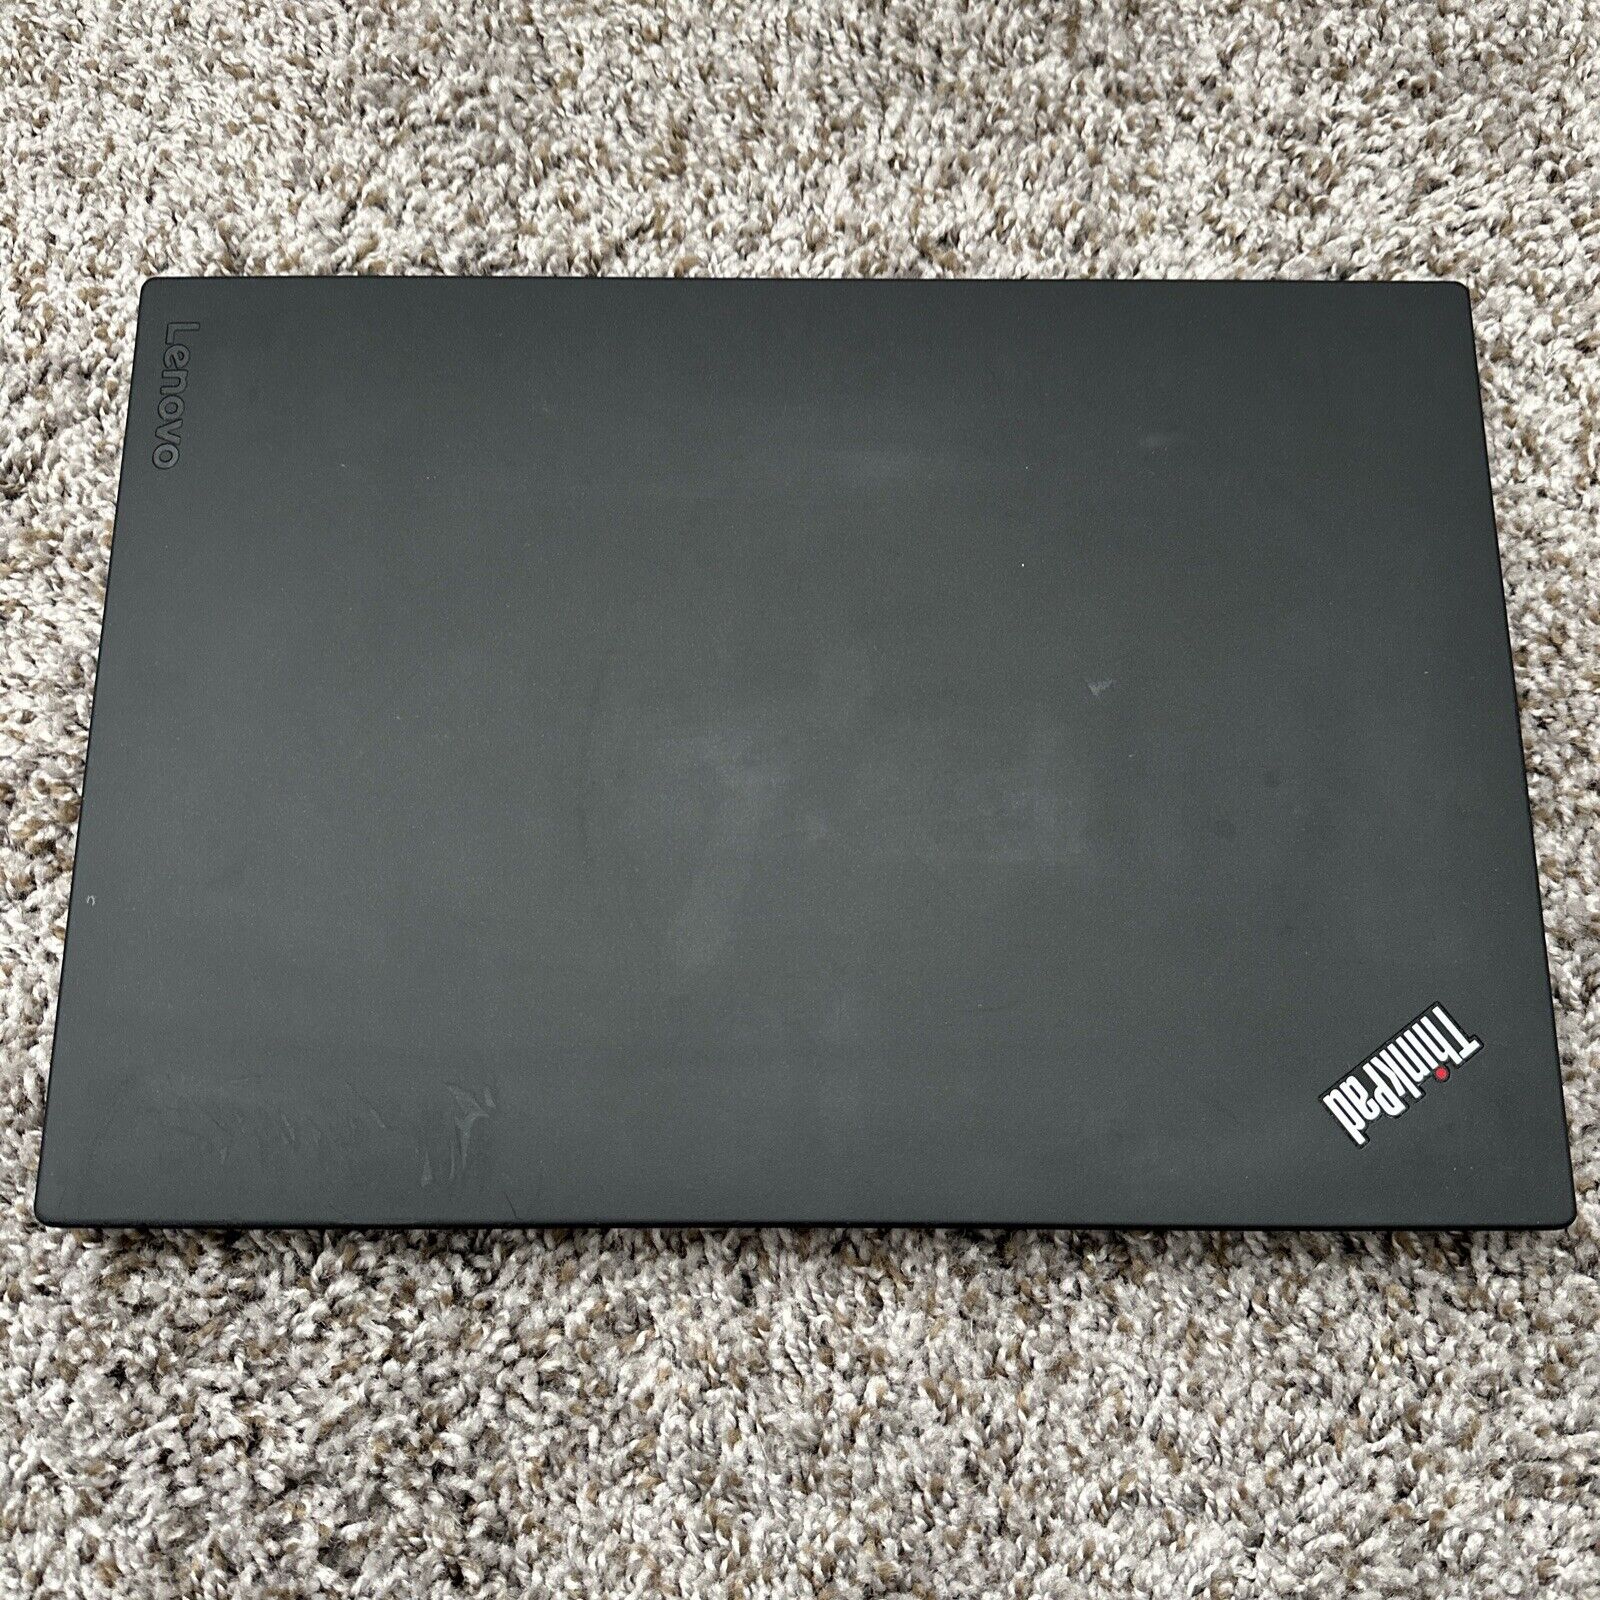 Lenovo T480 Thinkpad i5-8350U No RAM/SSD/Battery Cover/Charger